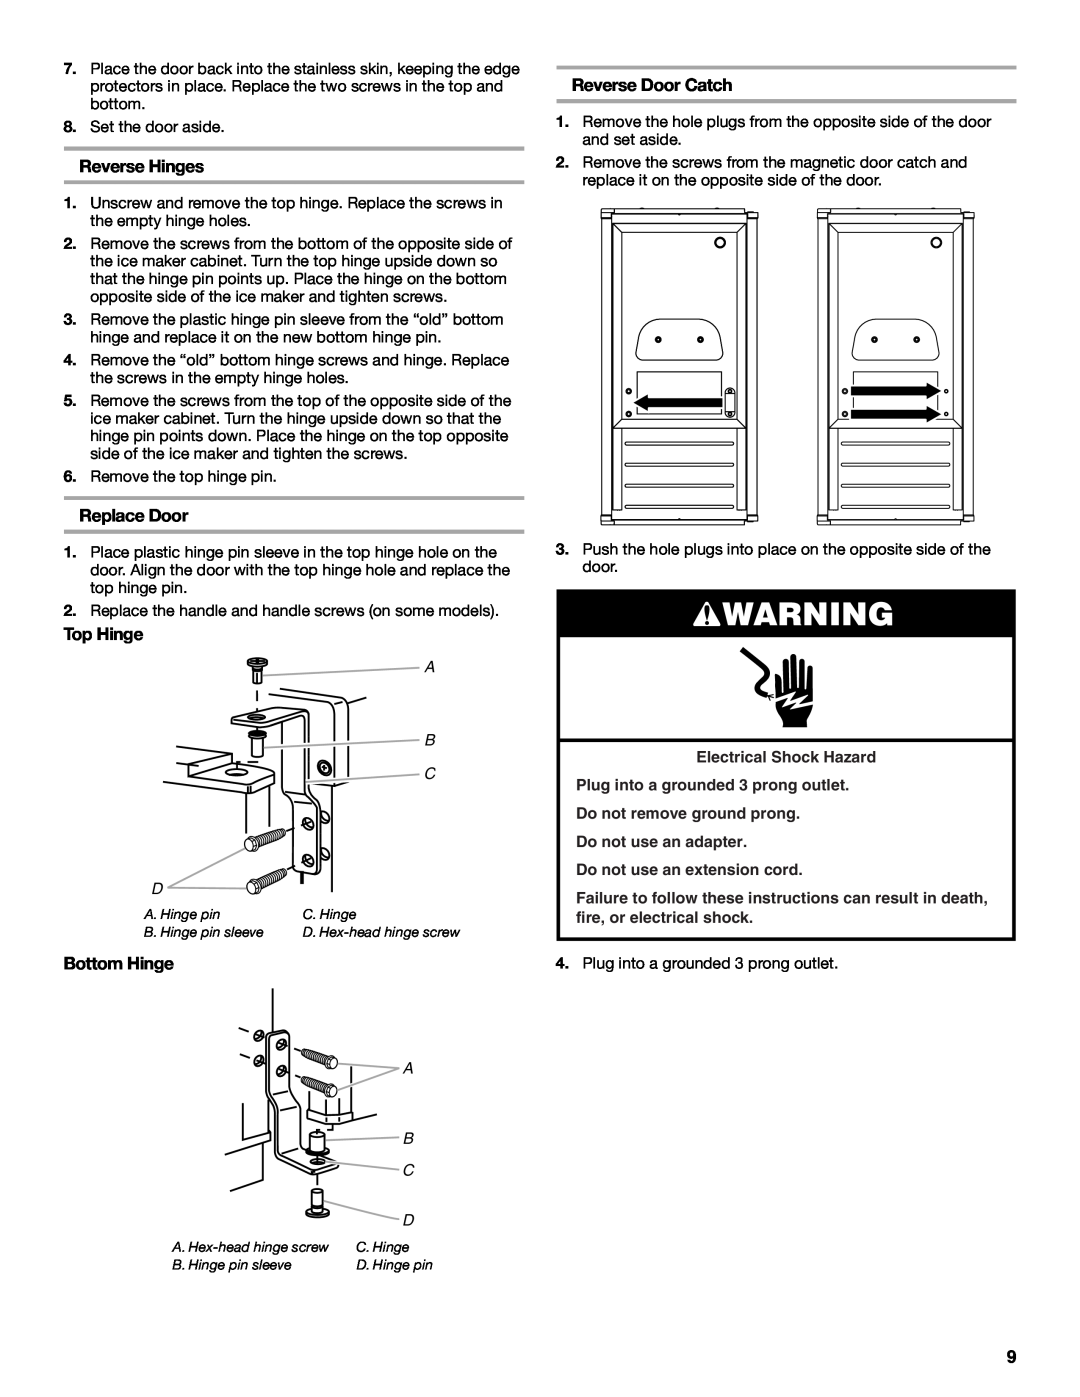 Jenn-Air W10136129C manual Reverse Hinges, Reverse Door Catch, Replace Door, Top Hinge, Bottom Hinge, A B C D 